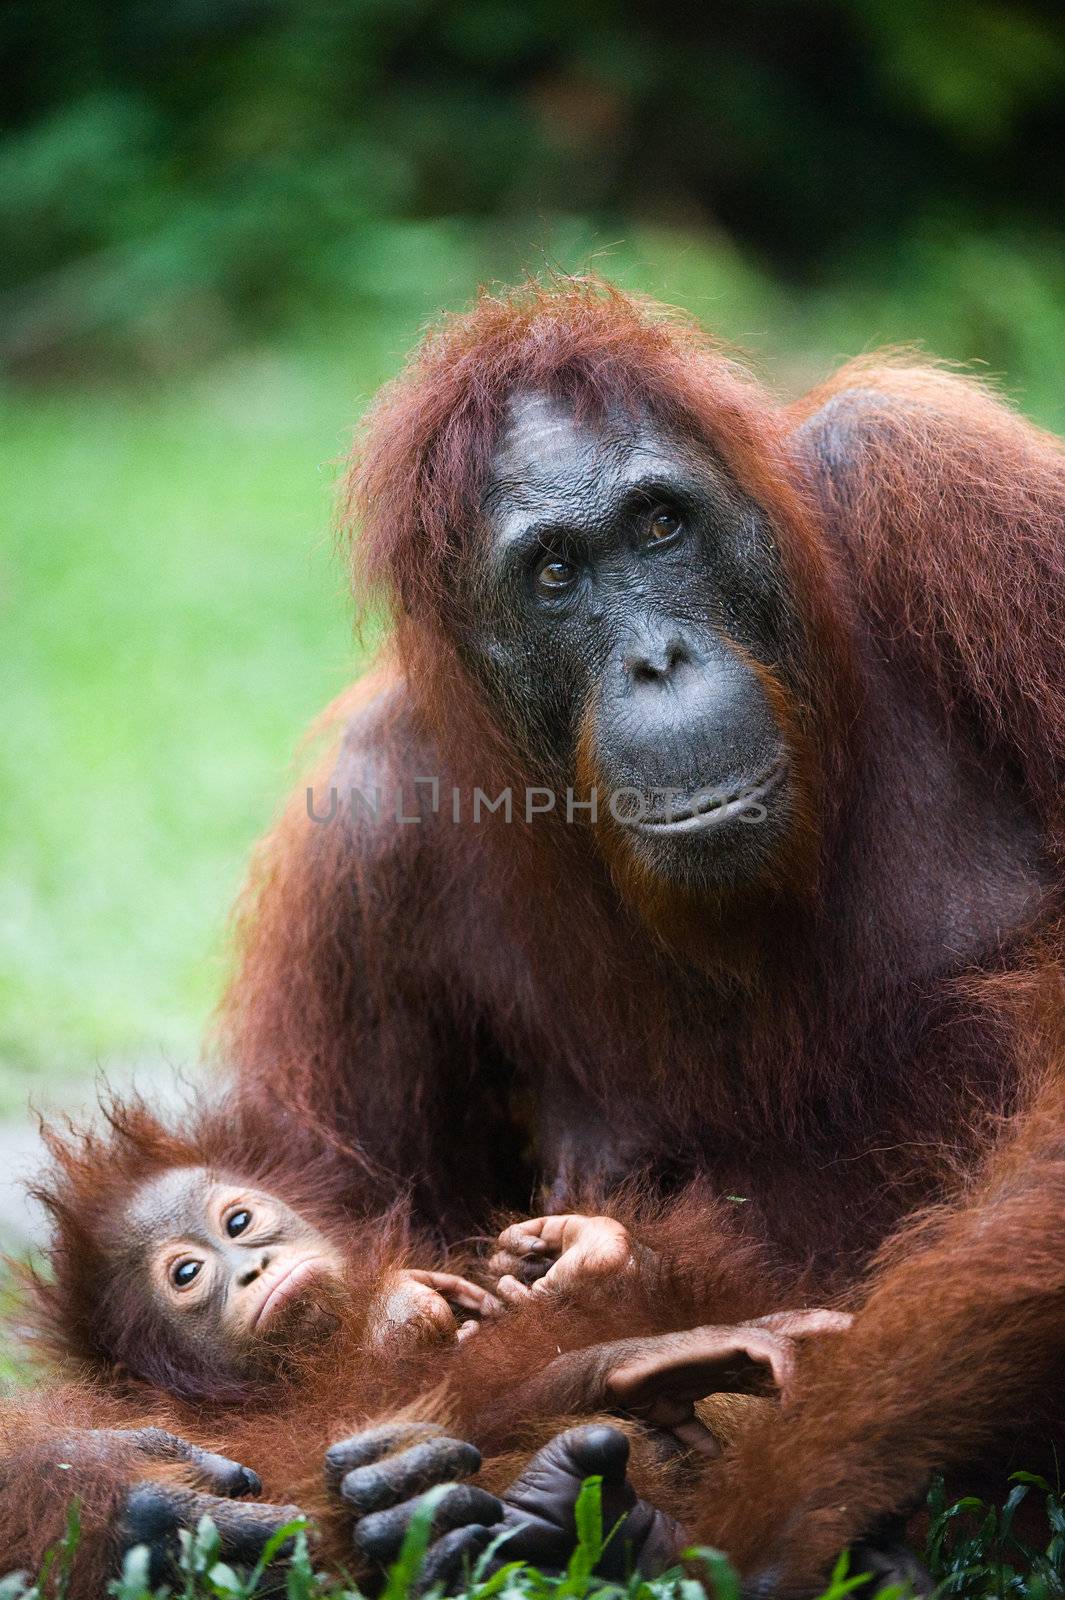 Female the orangutan with the cub. by SURZ